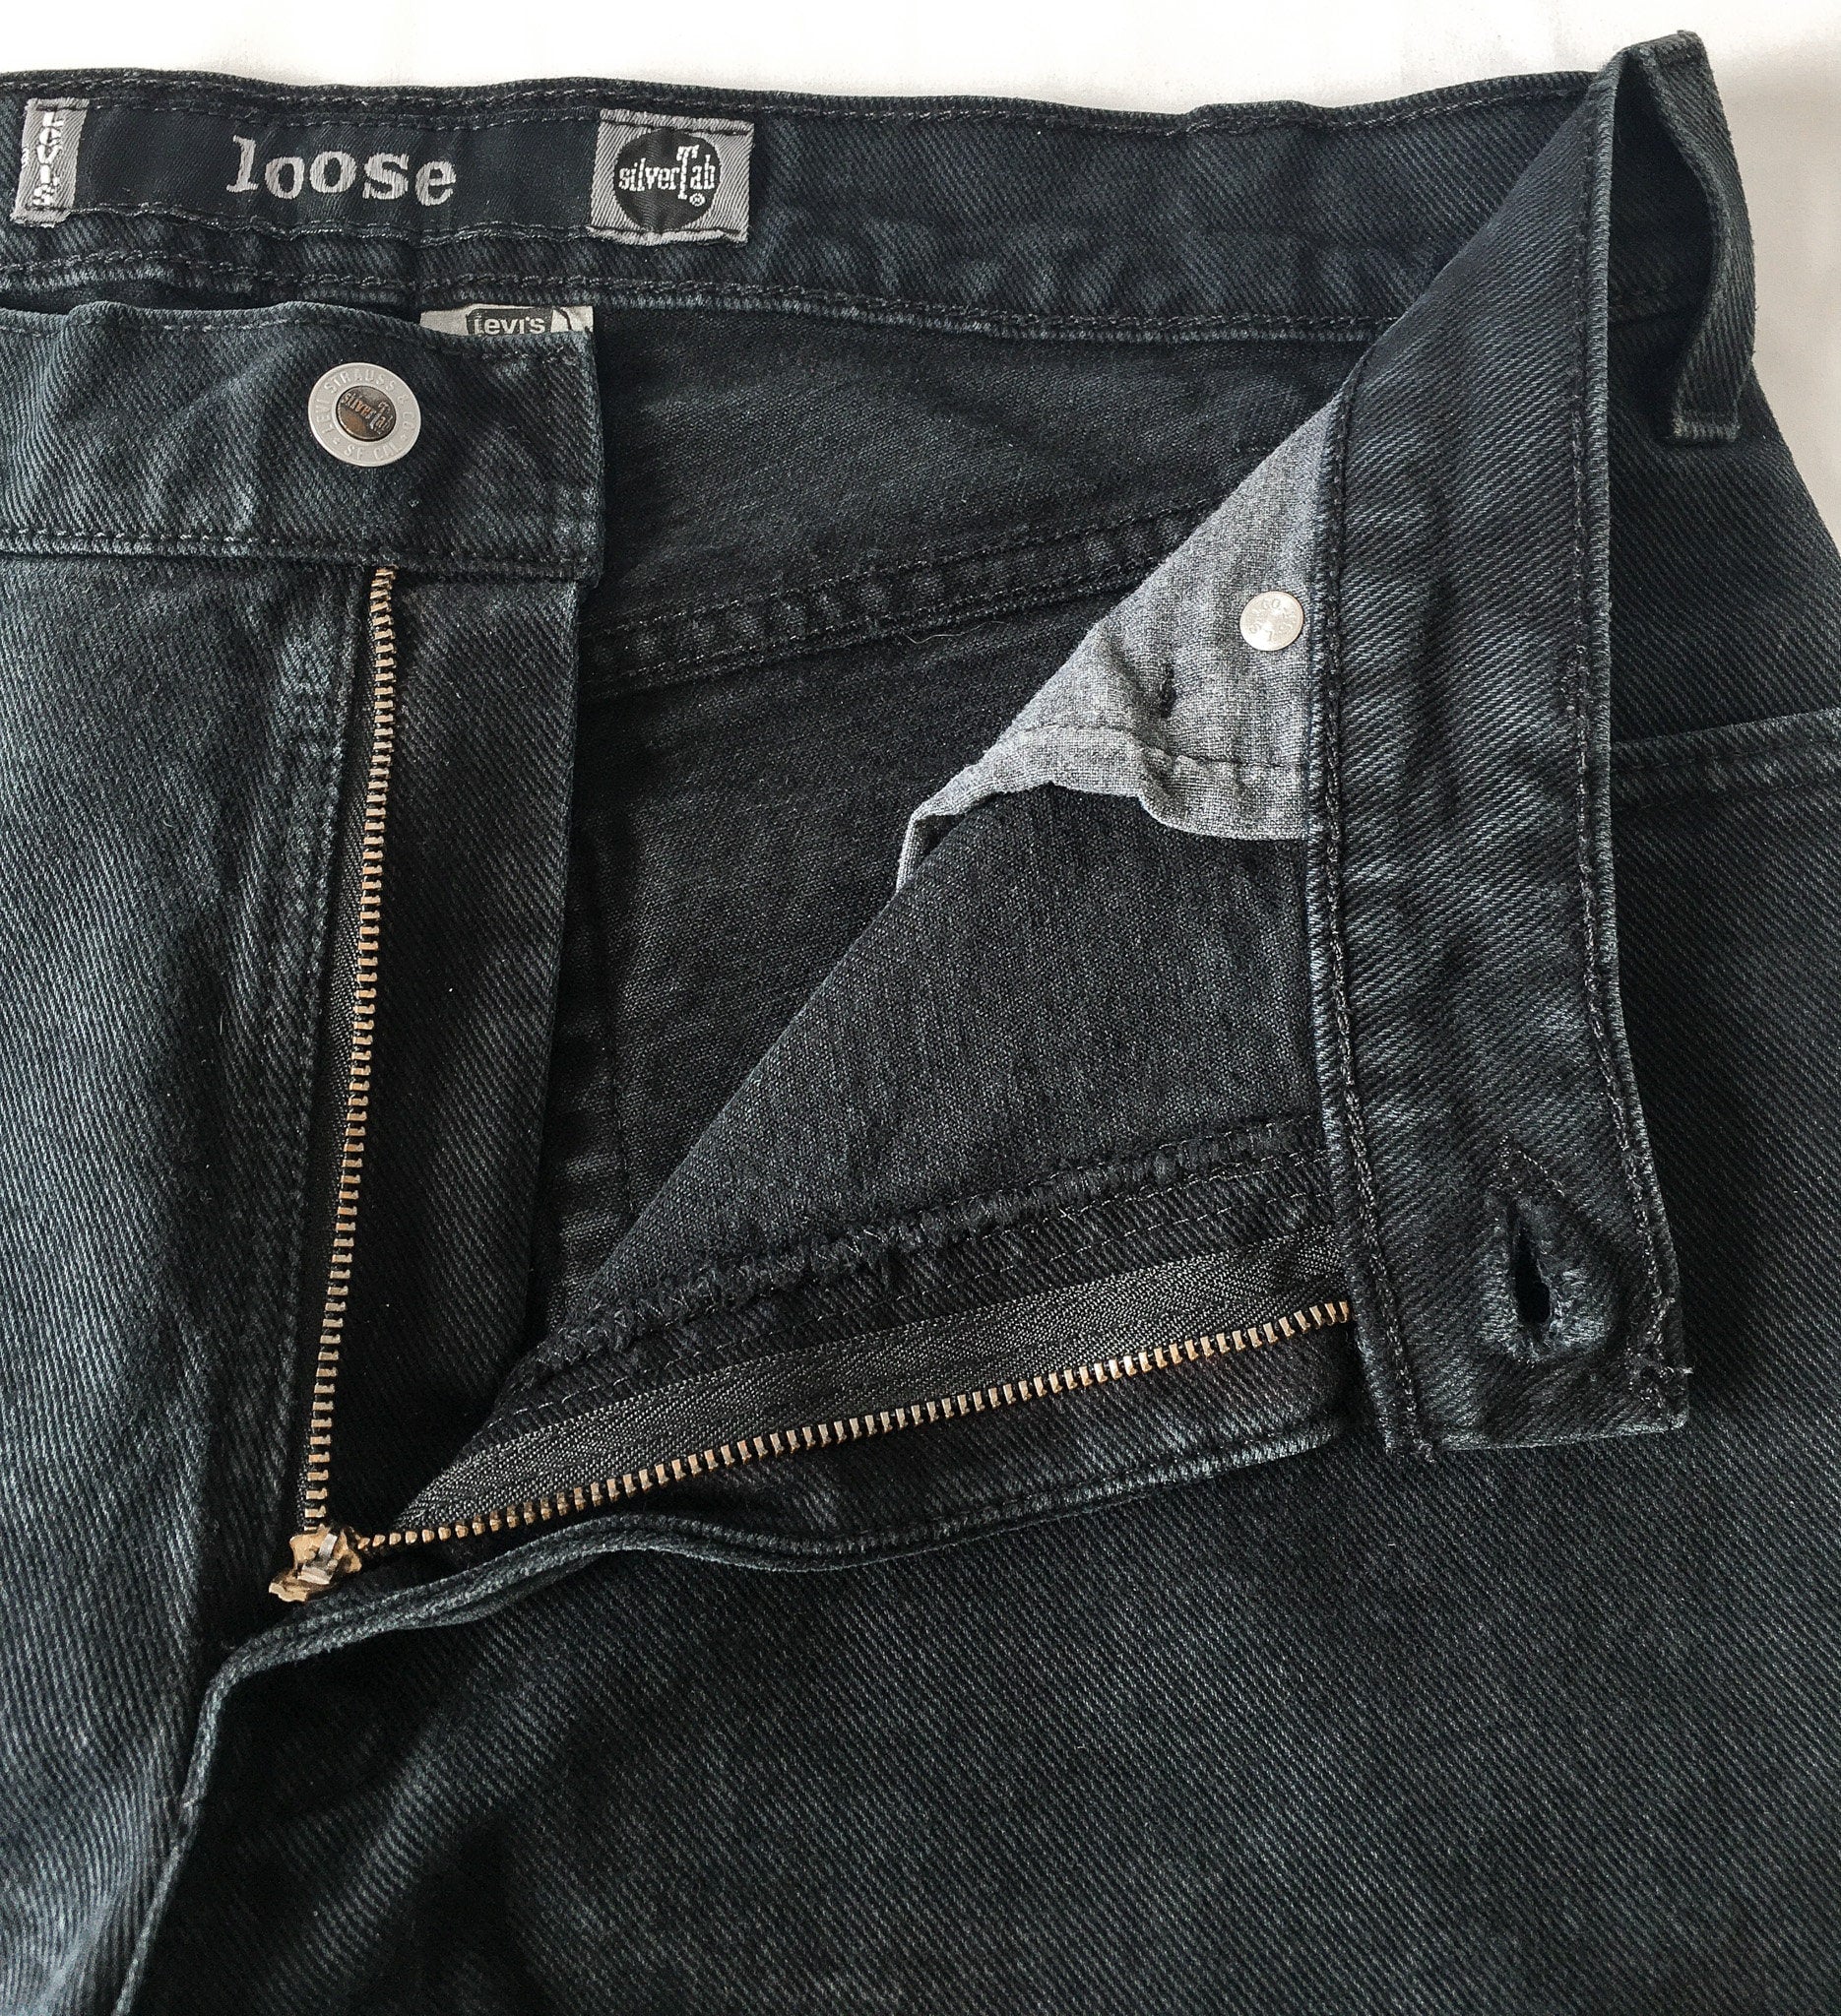 Vintage 90s Levi's Silver Tab Black "Loose" Fit Jeans, Sz. 31 x 32